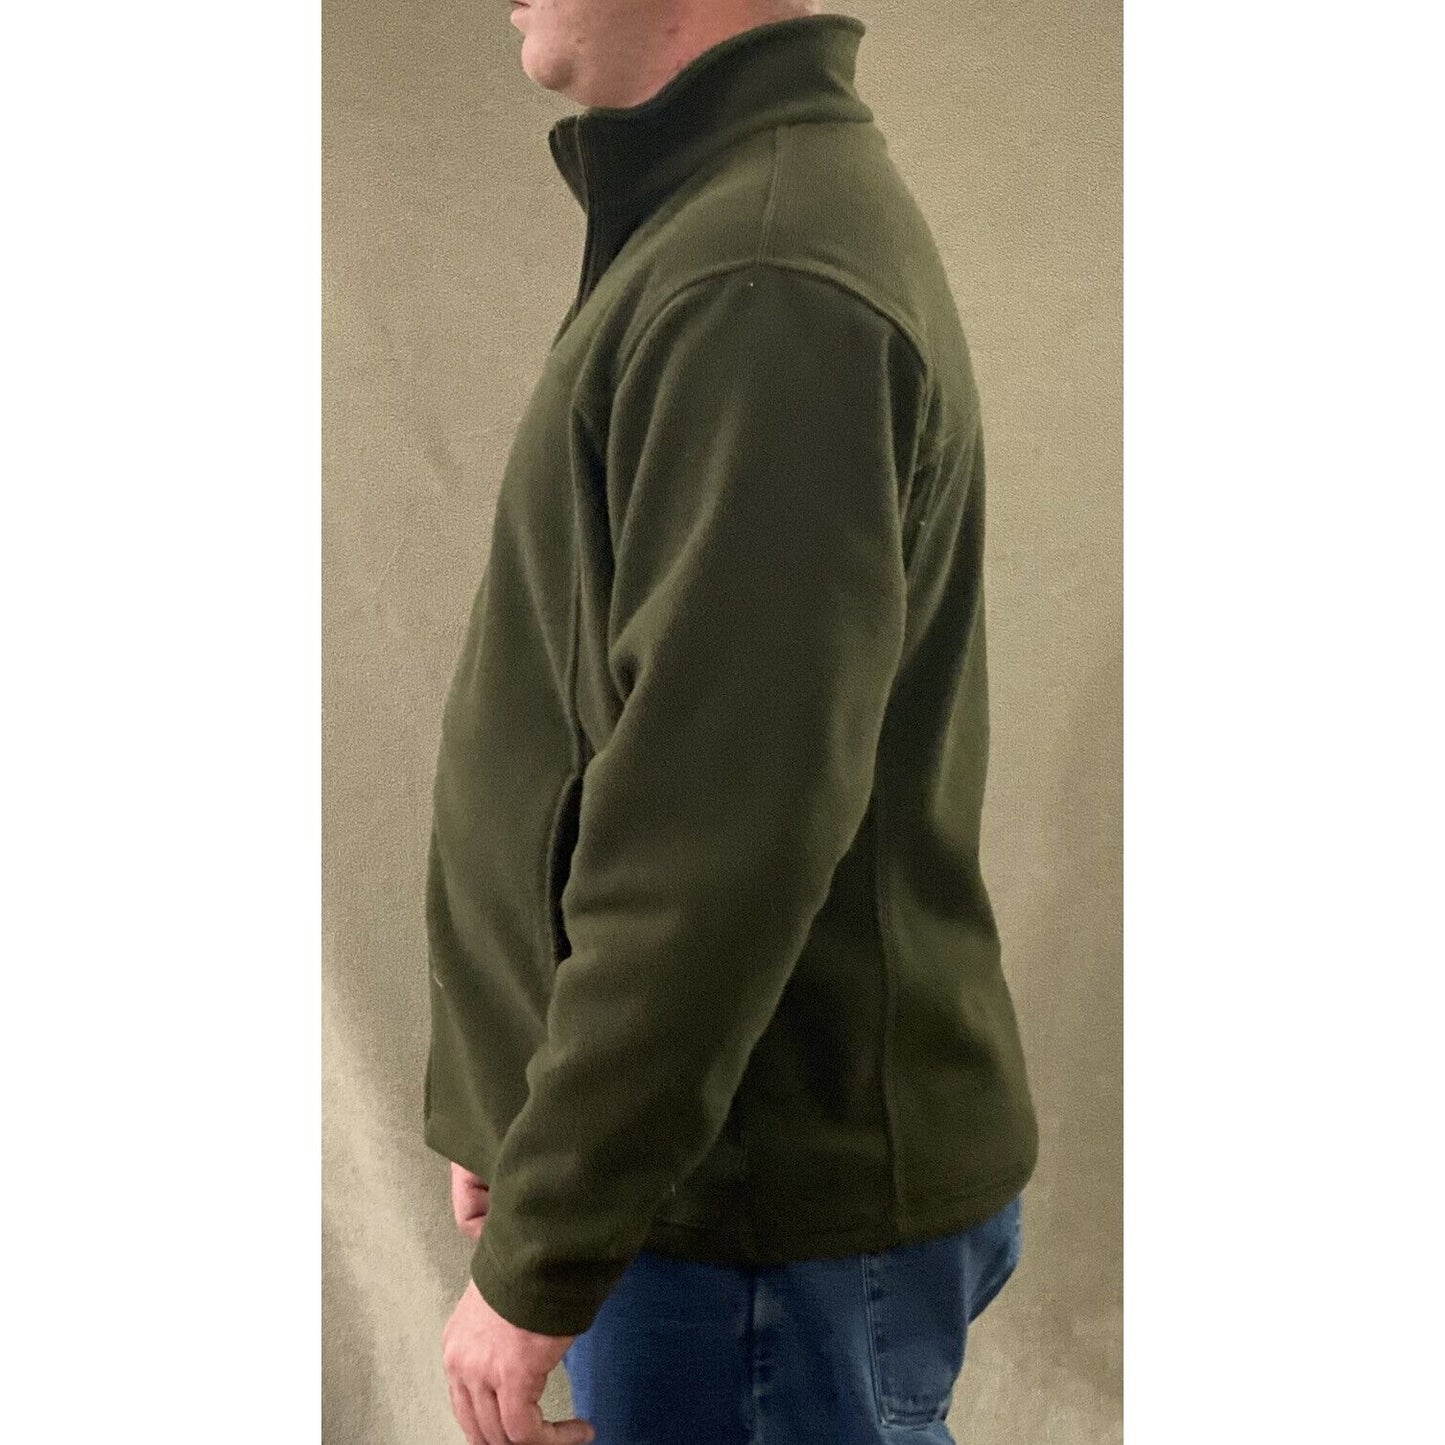 Bass Pro Shops Men’s Medium Olive Green Full-zip Fleece Polyester Jacket